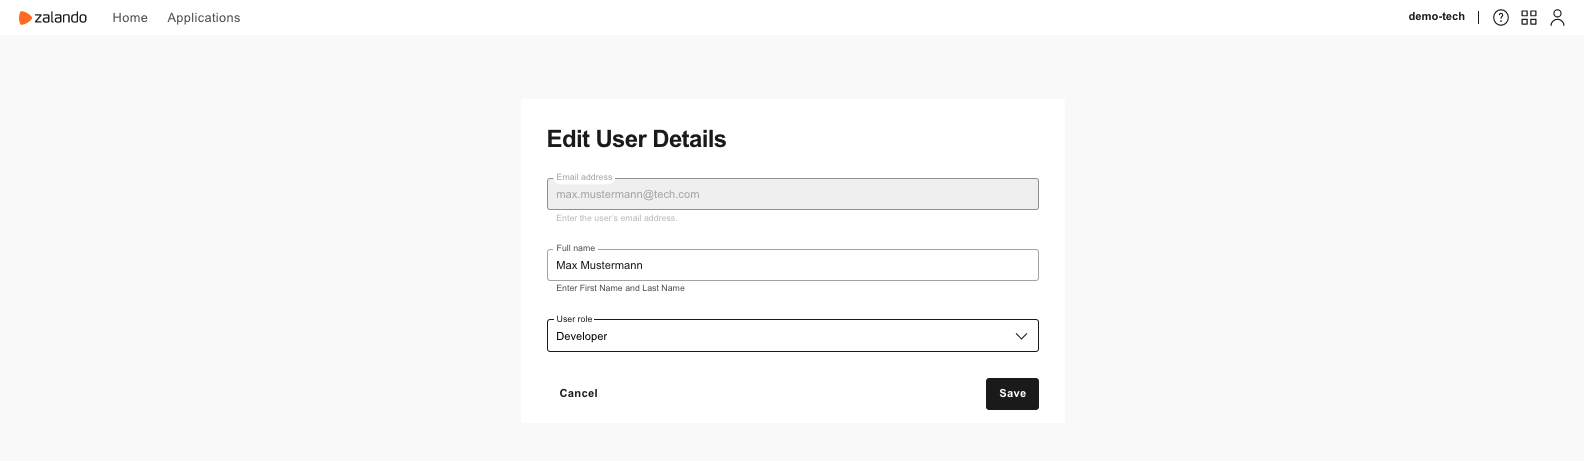 zDirect User Details Update Form